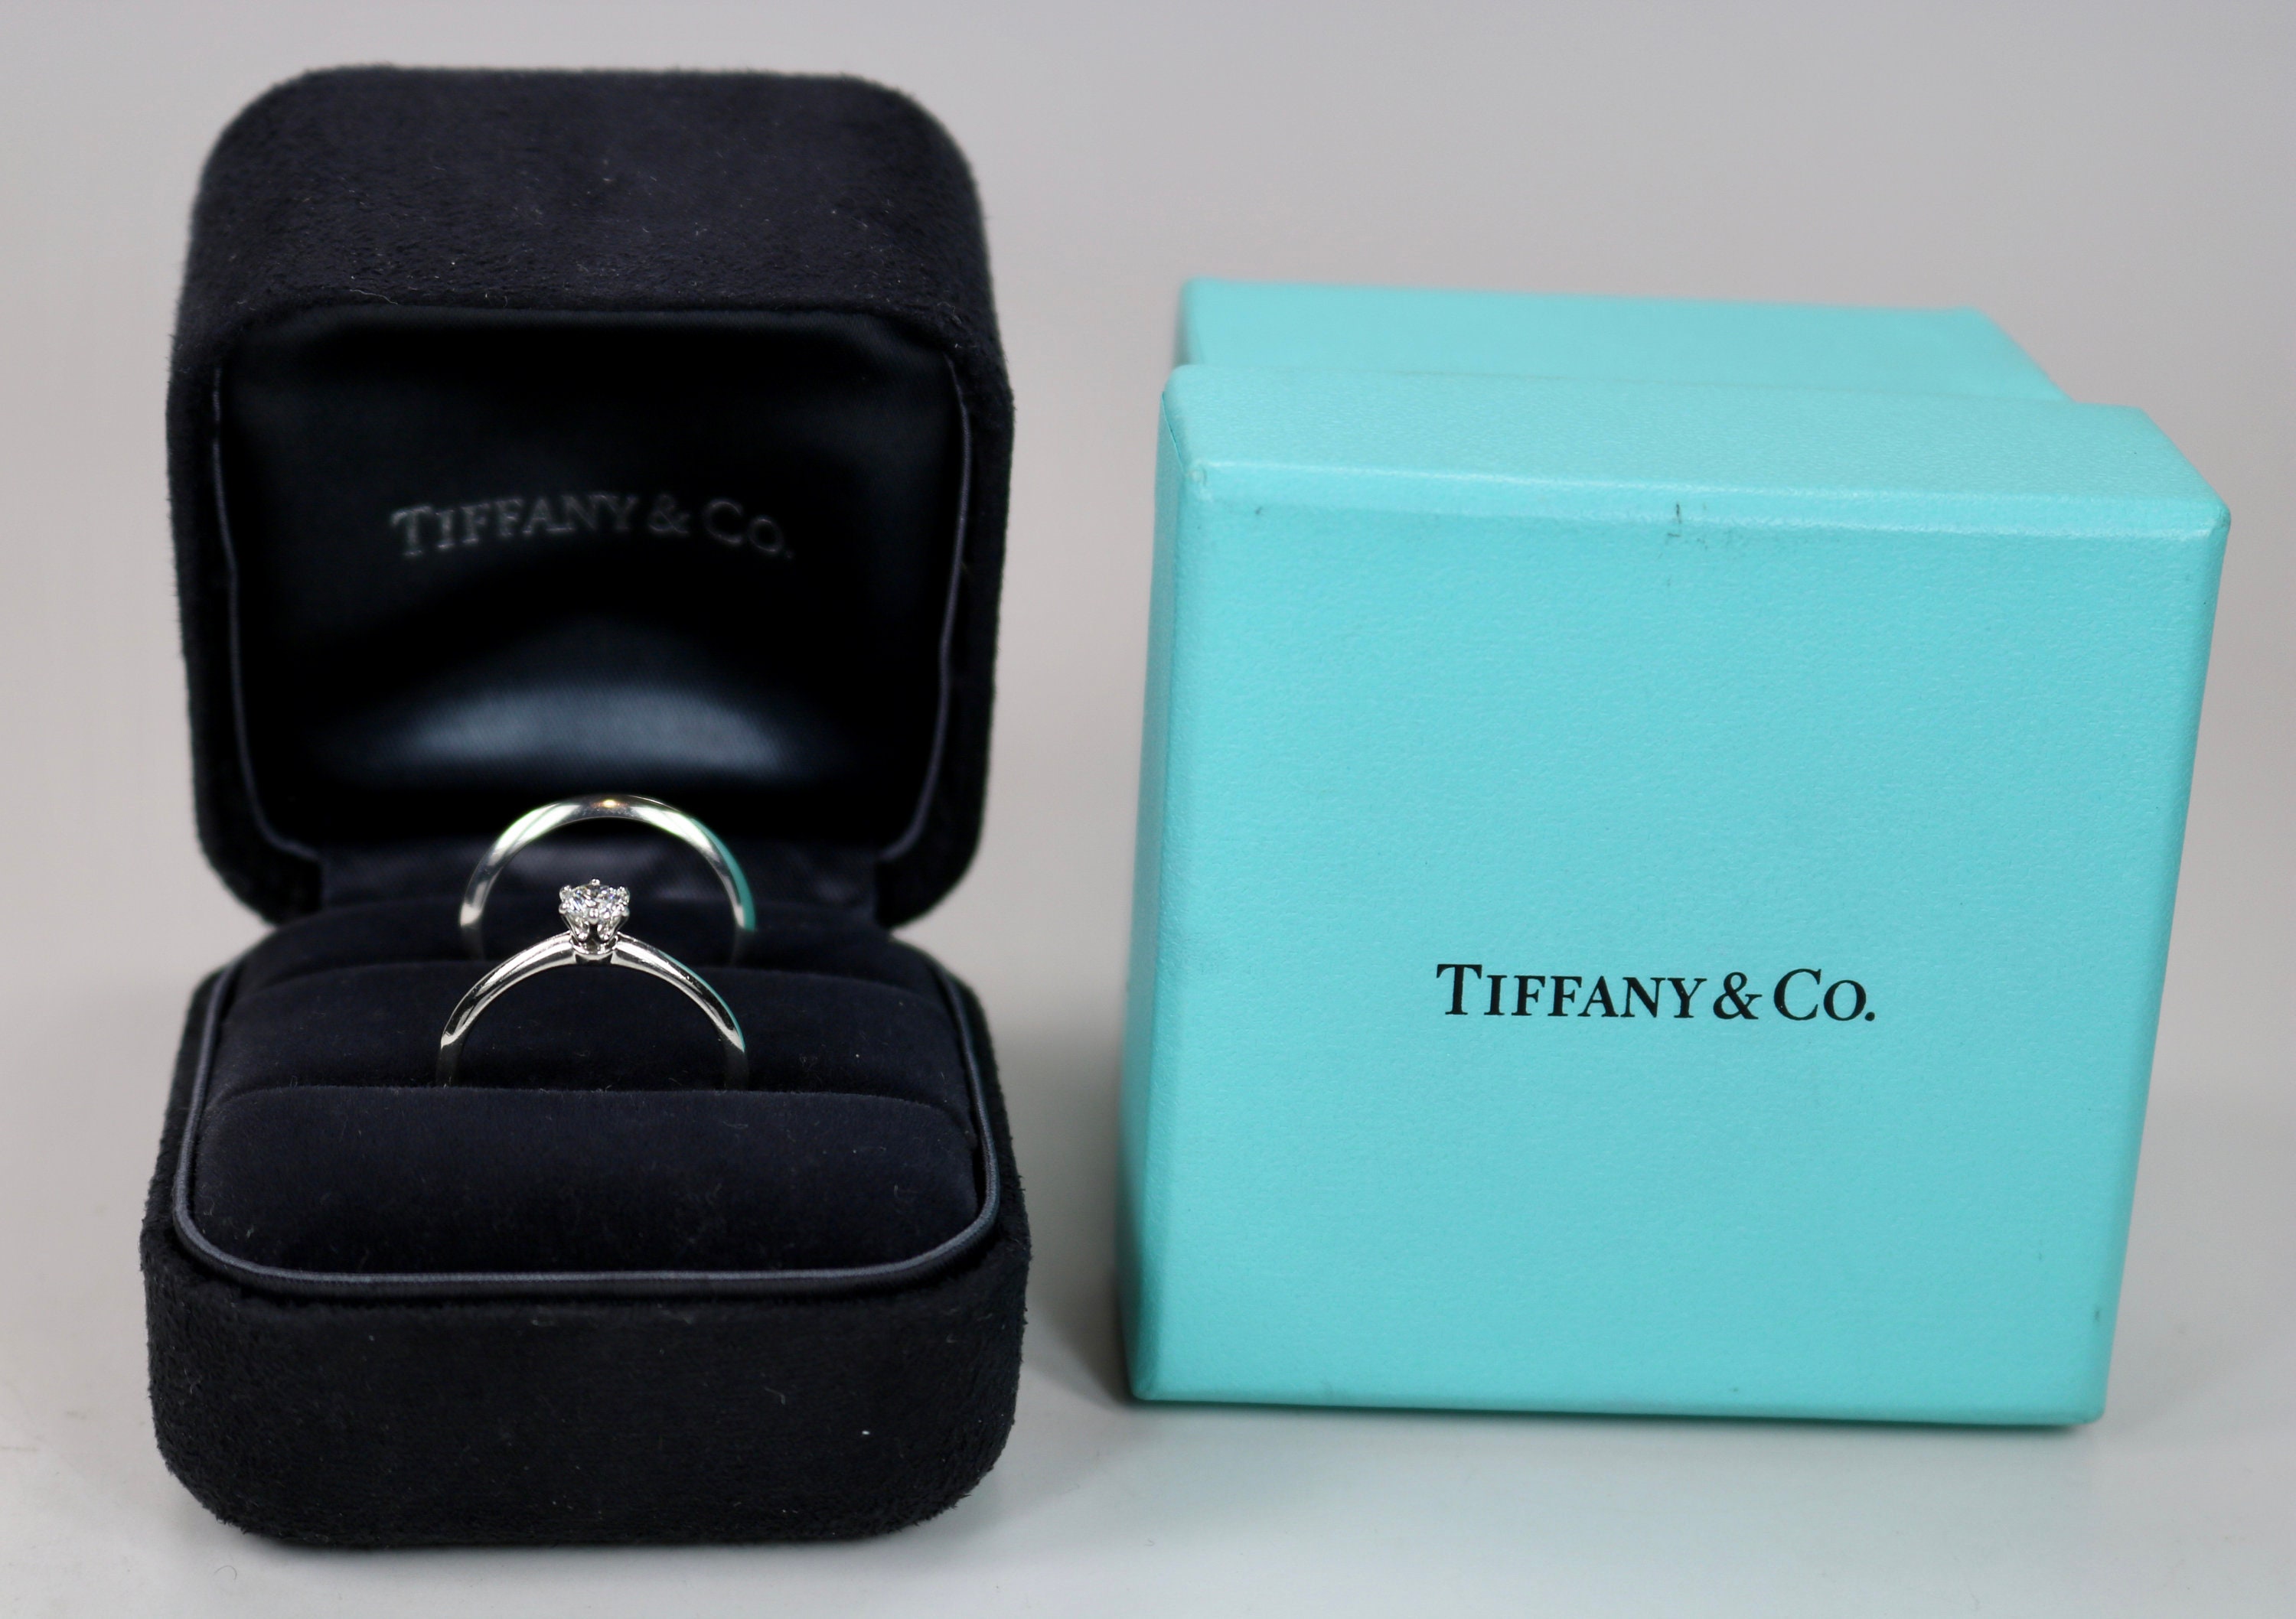 Tiffany and Co. Return to Tiffany™ Scarf Ring